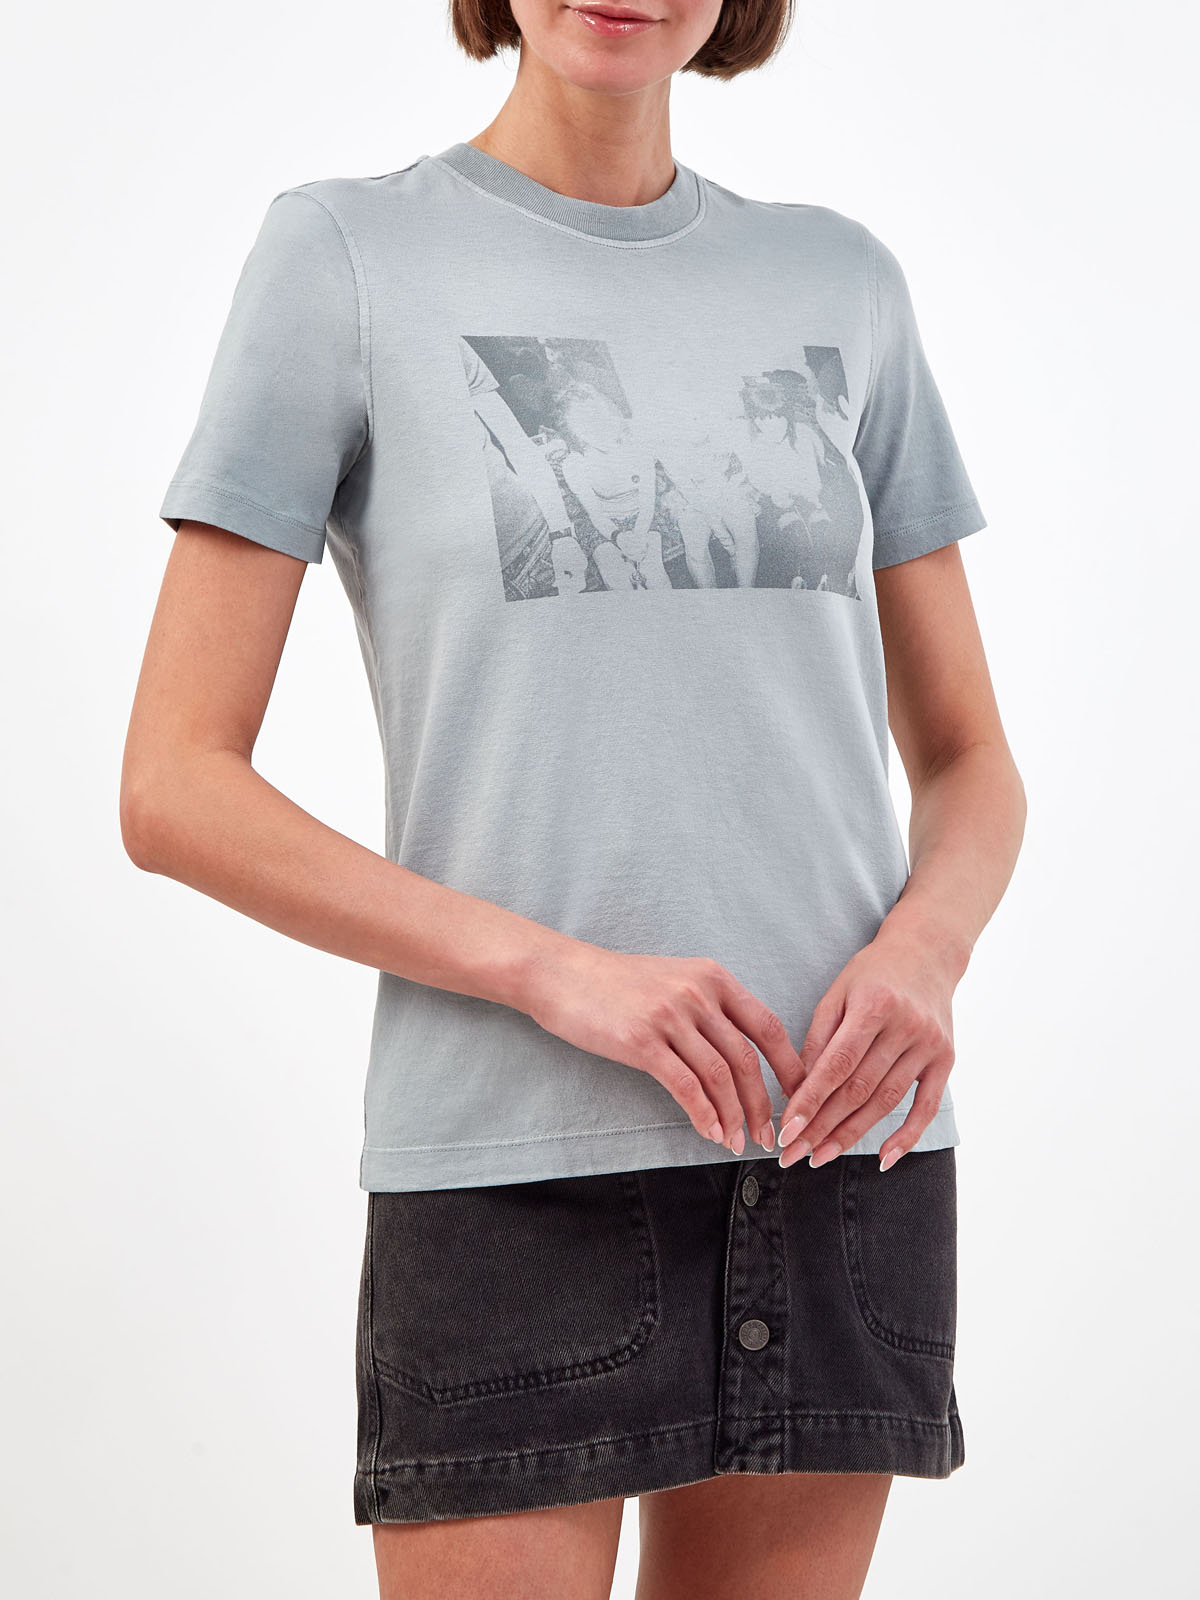 Хлопковая футболка T-Reg из джерси с цифровым принтом DIESEL, цвет серый, размер S;M;L;XL - фото 3